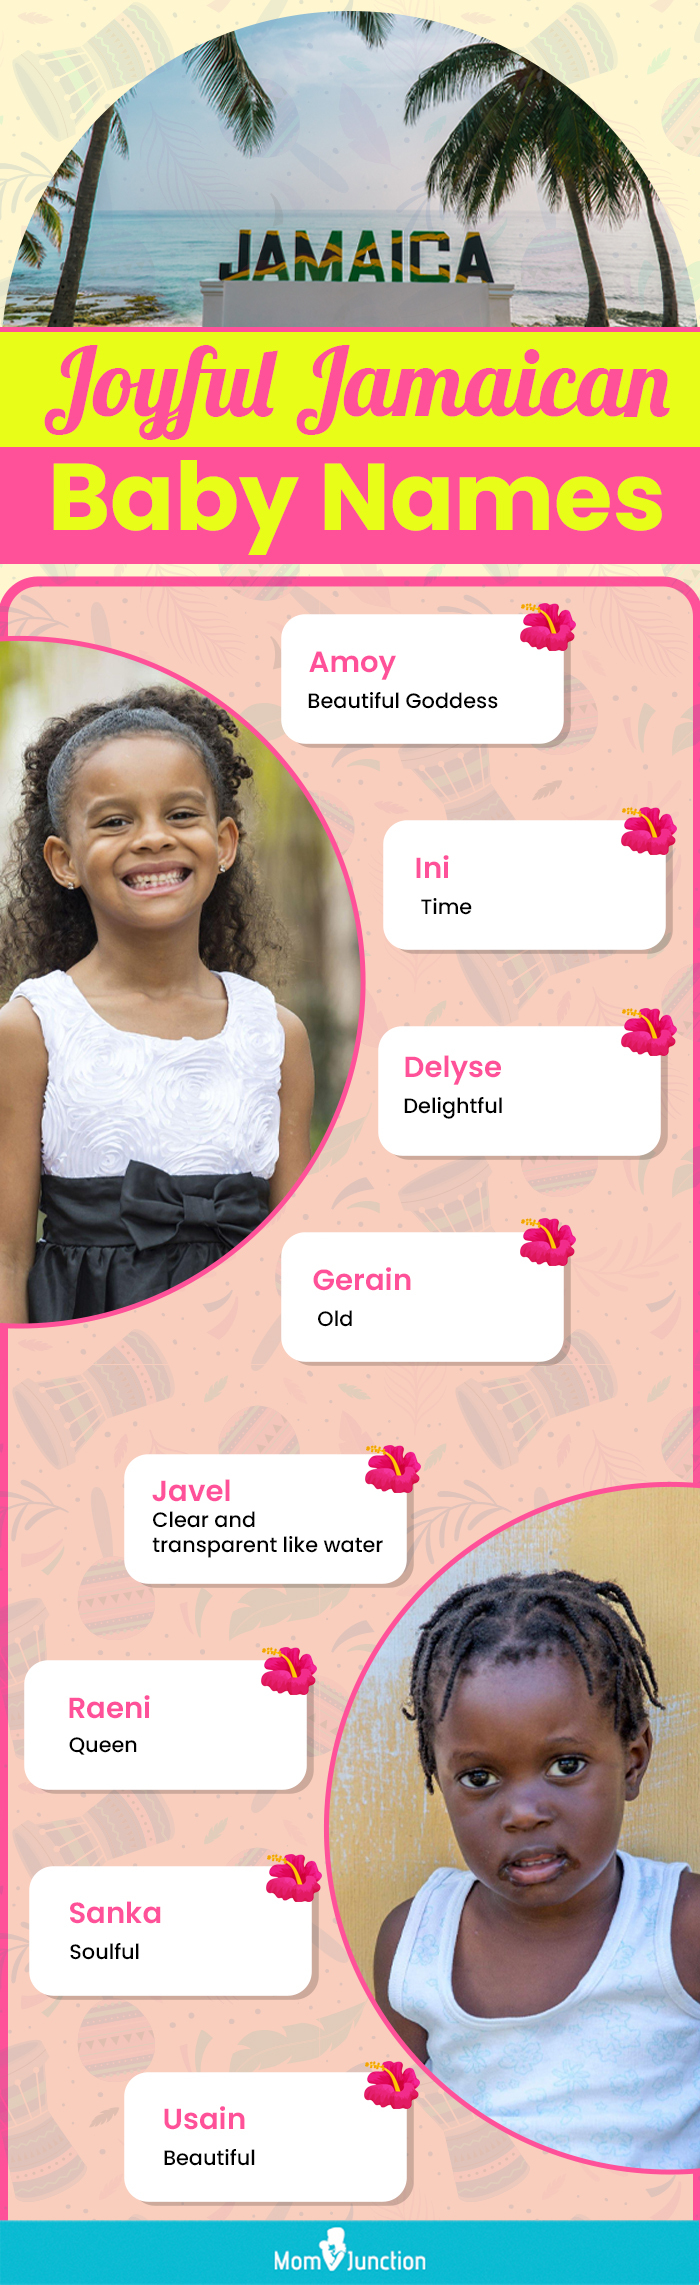 joyful jamaican baby names (infographic)